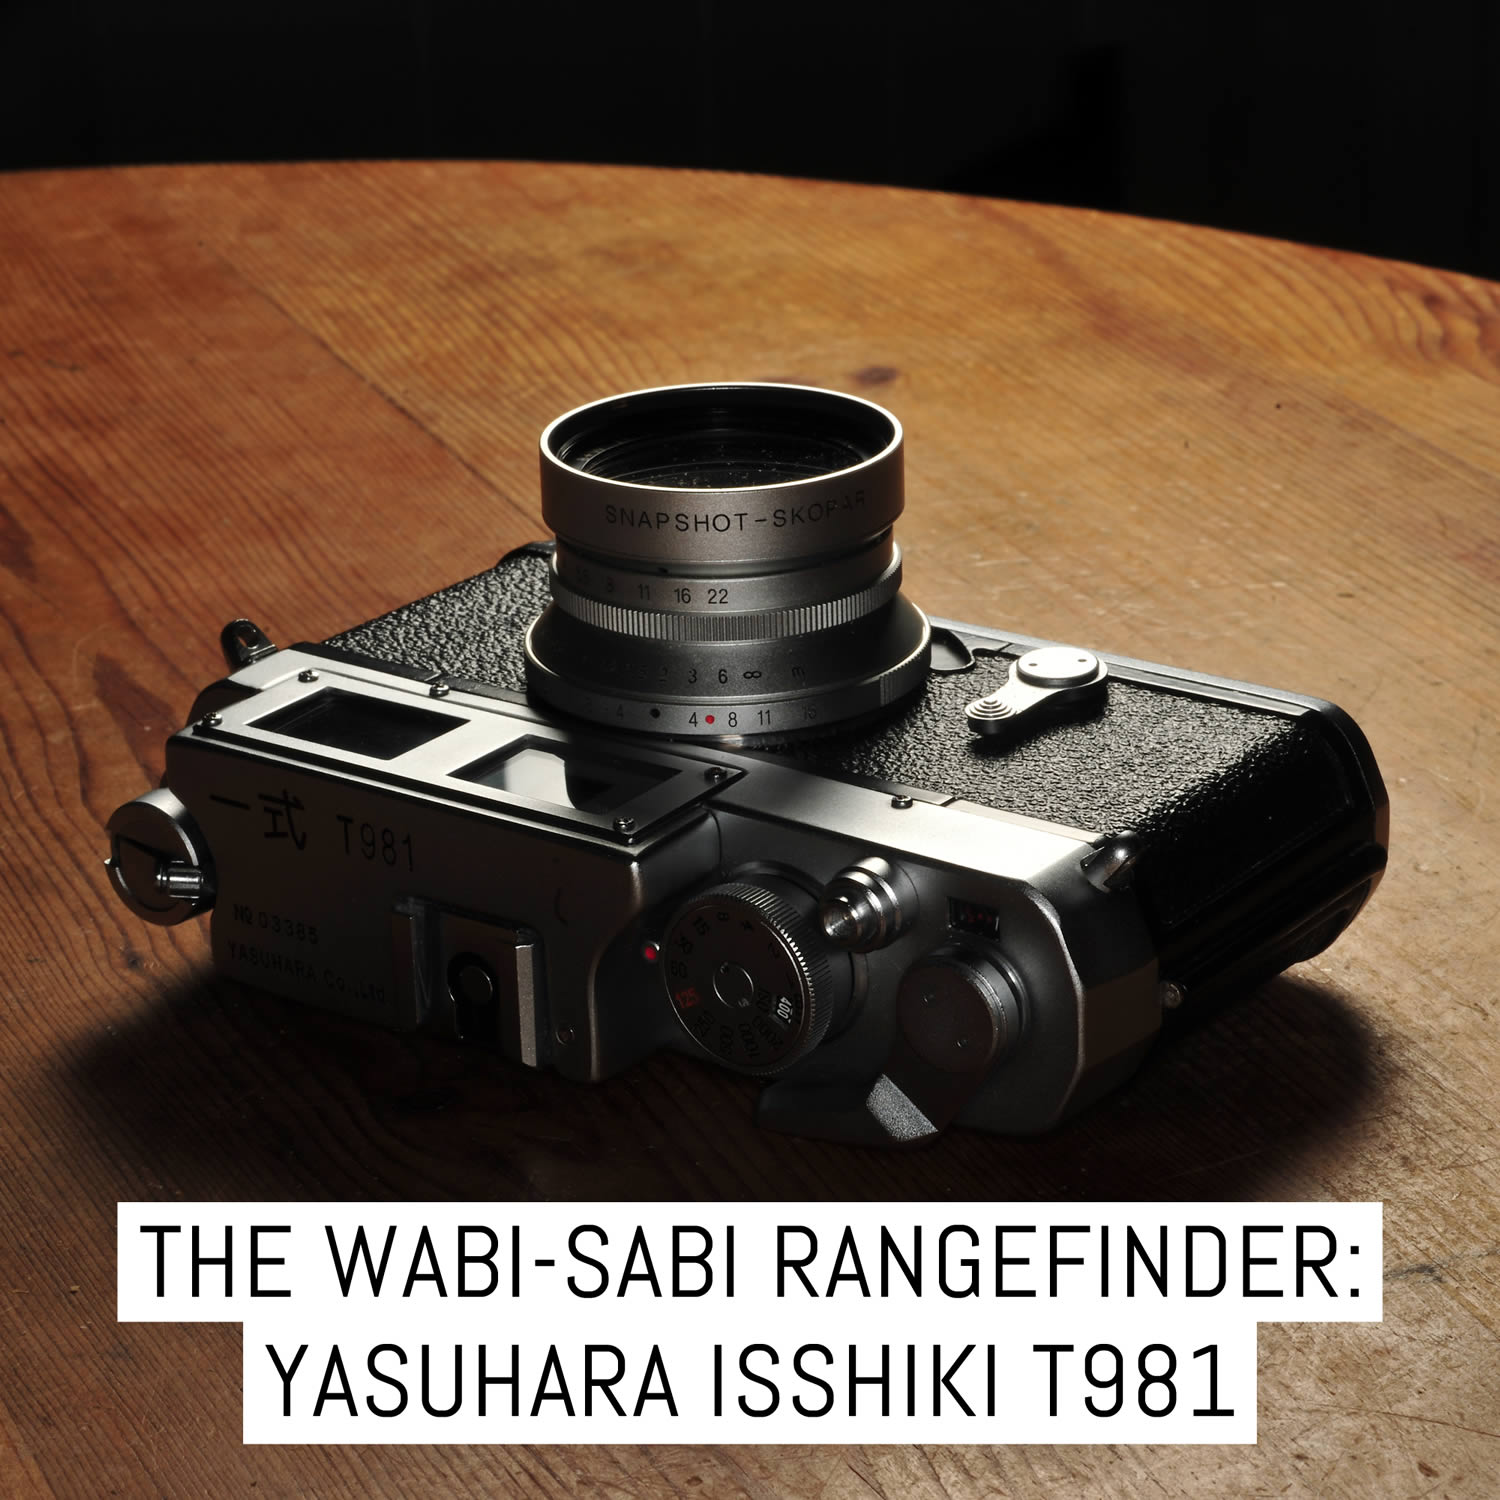 The Wabi-Sabi rangefinder: Yasuhara 一式 T981 (Isshiki T981)